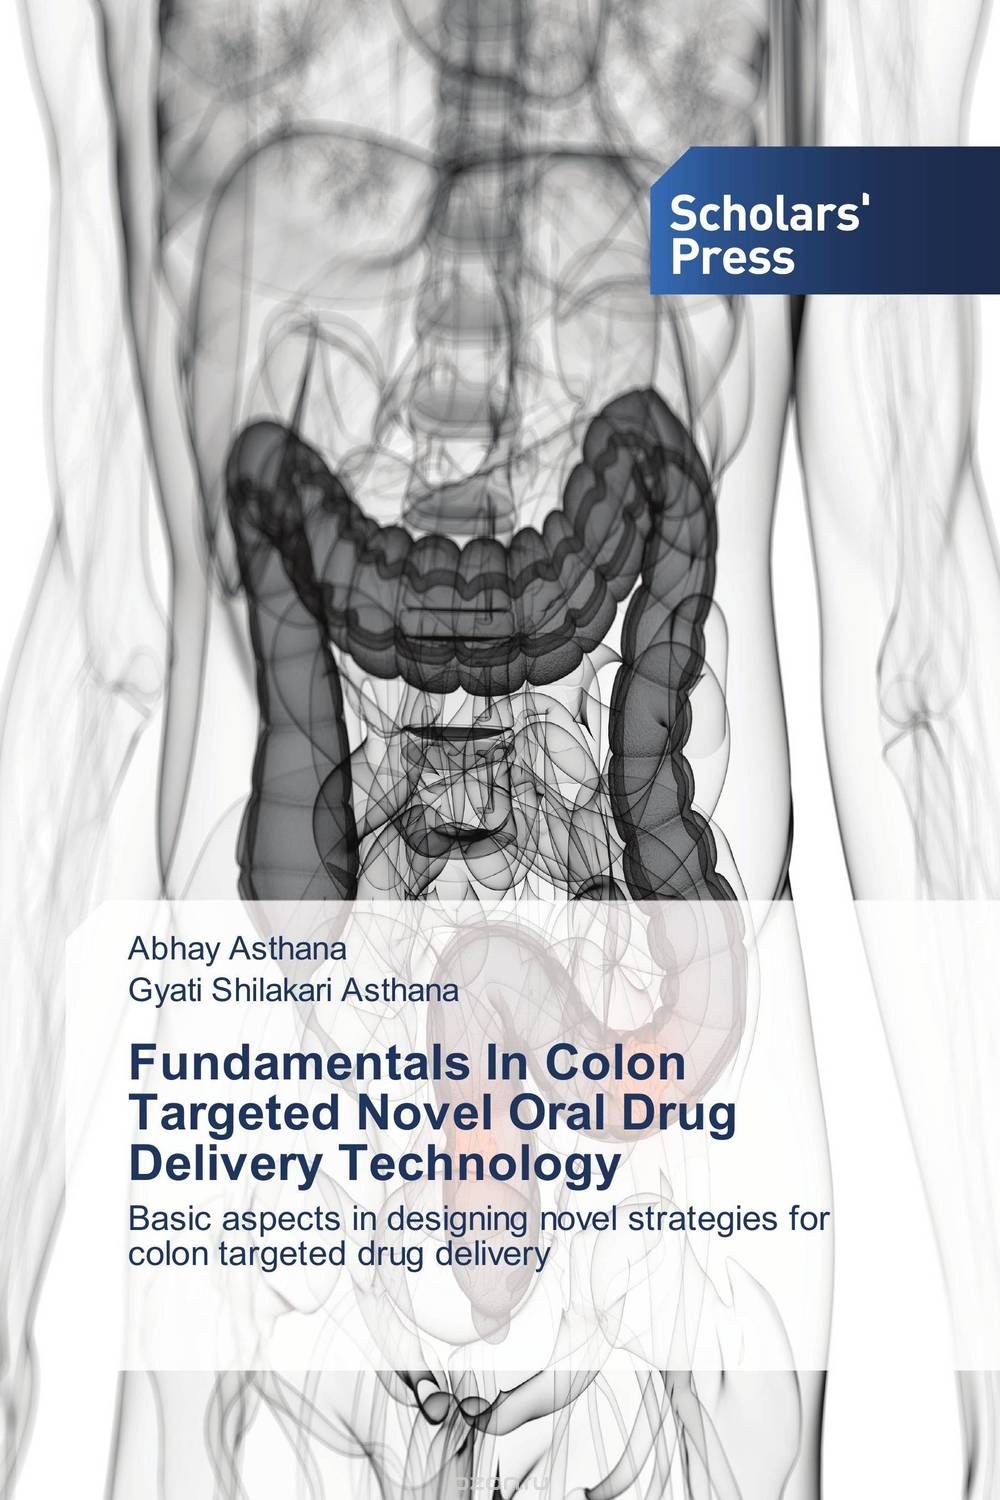 Скачать книгу "Fundamentals In Colon Targeted Novel Oral Drug Delivery Technology"